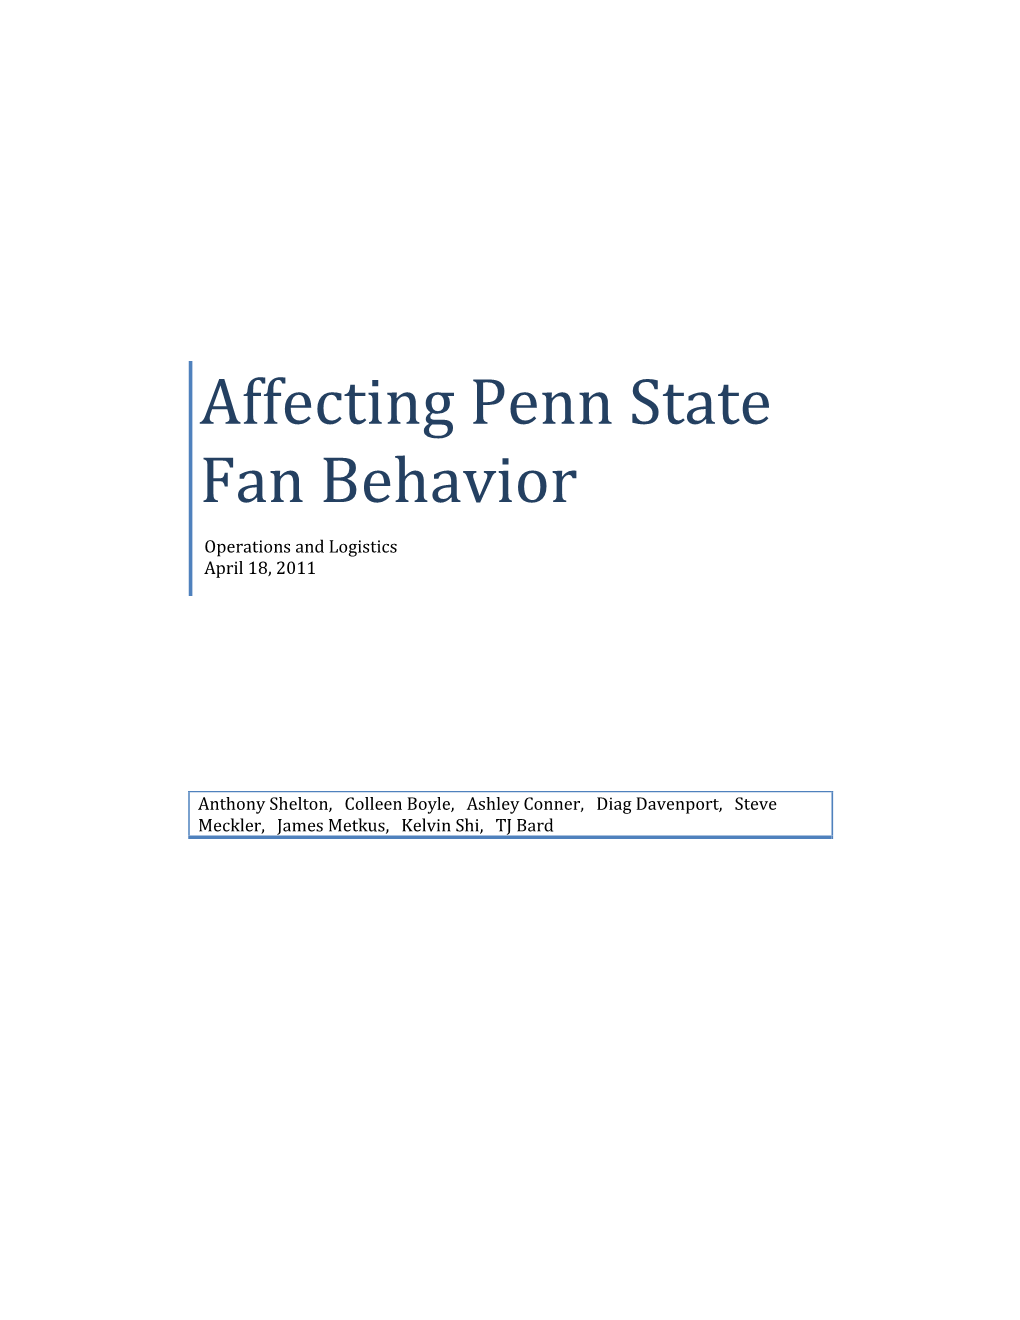 Affecting Penn State Fan Behavior Anthony Shelton, Colleen Boyle, Ashley Conner, Diag Davenport, Steve Meckler, James